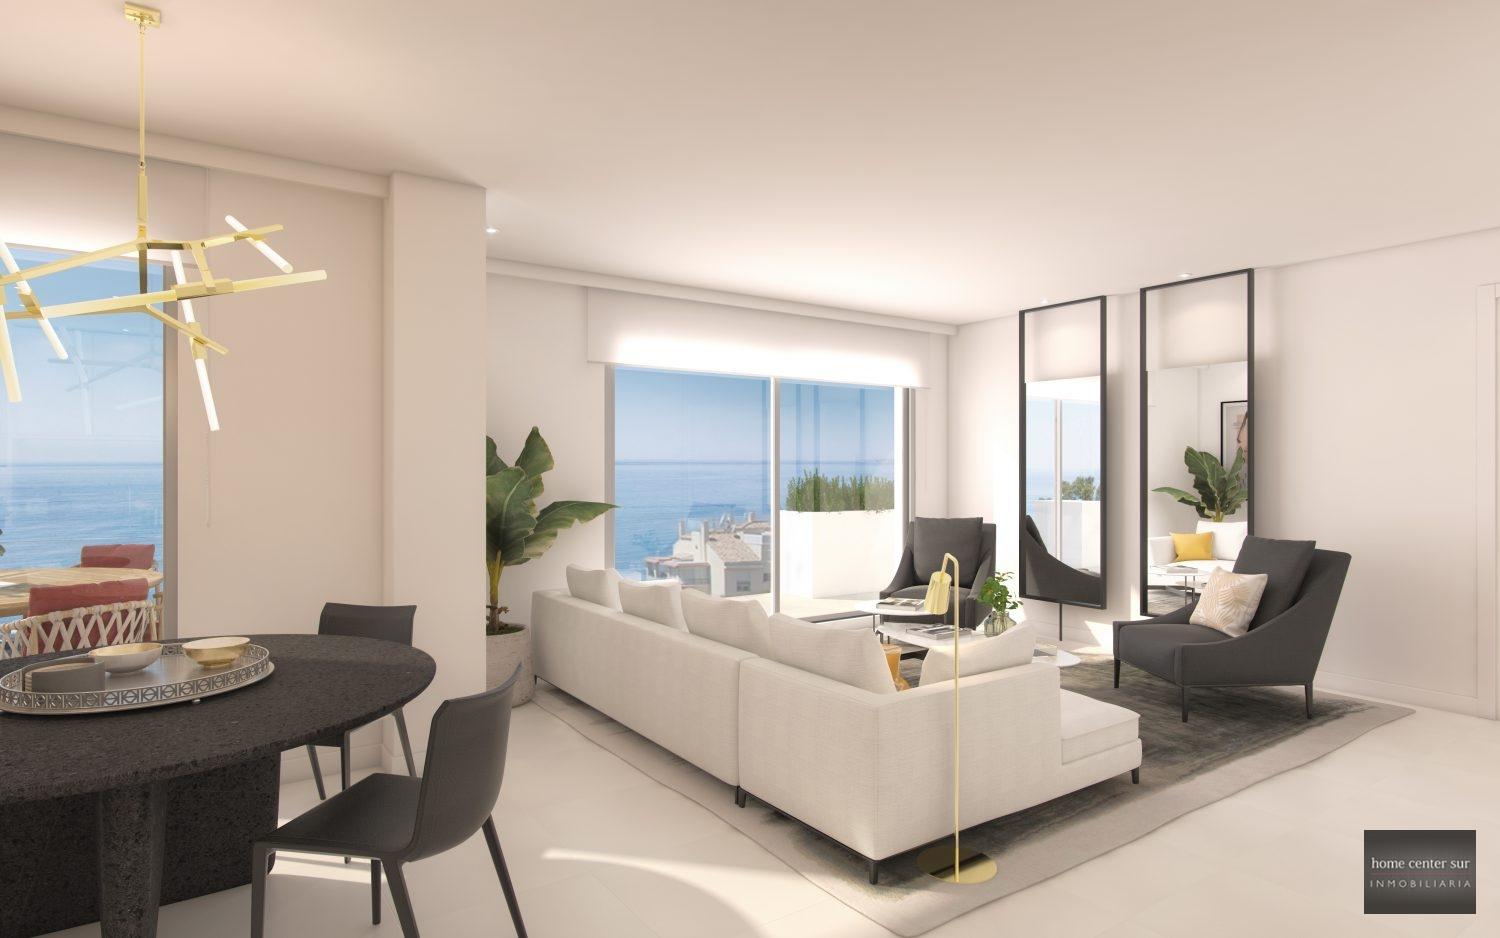 Apartamento en venta en construcción en Carretera Cádiz 90 (Benalmádena Costa), 391.800 €